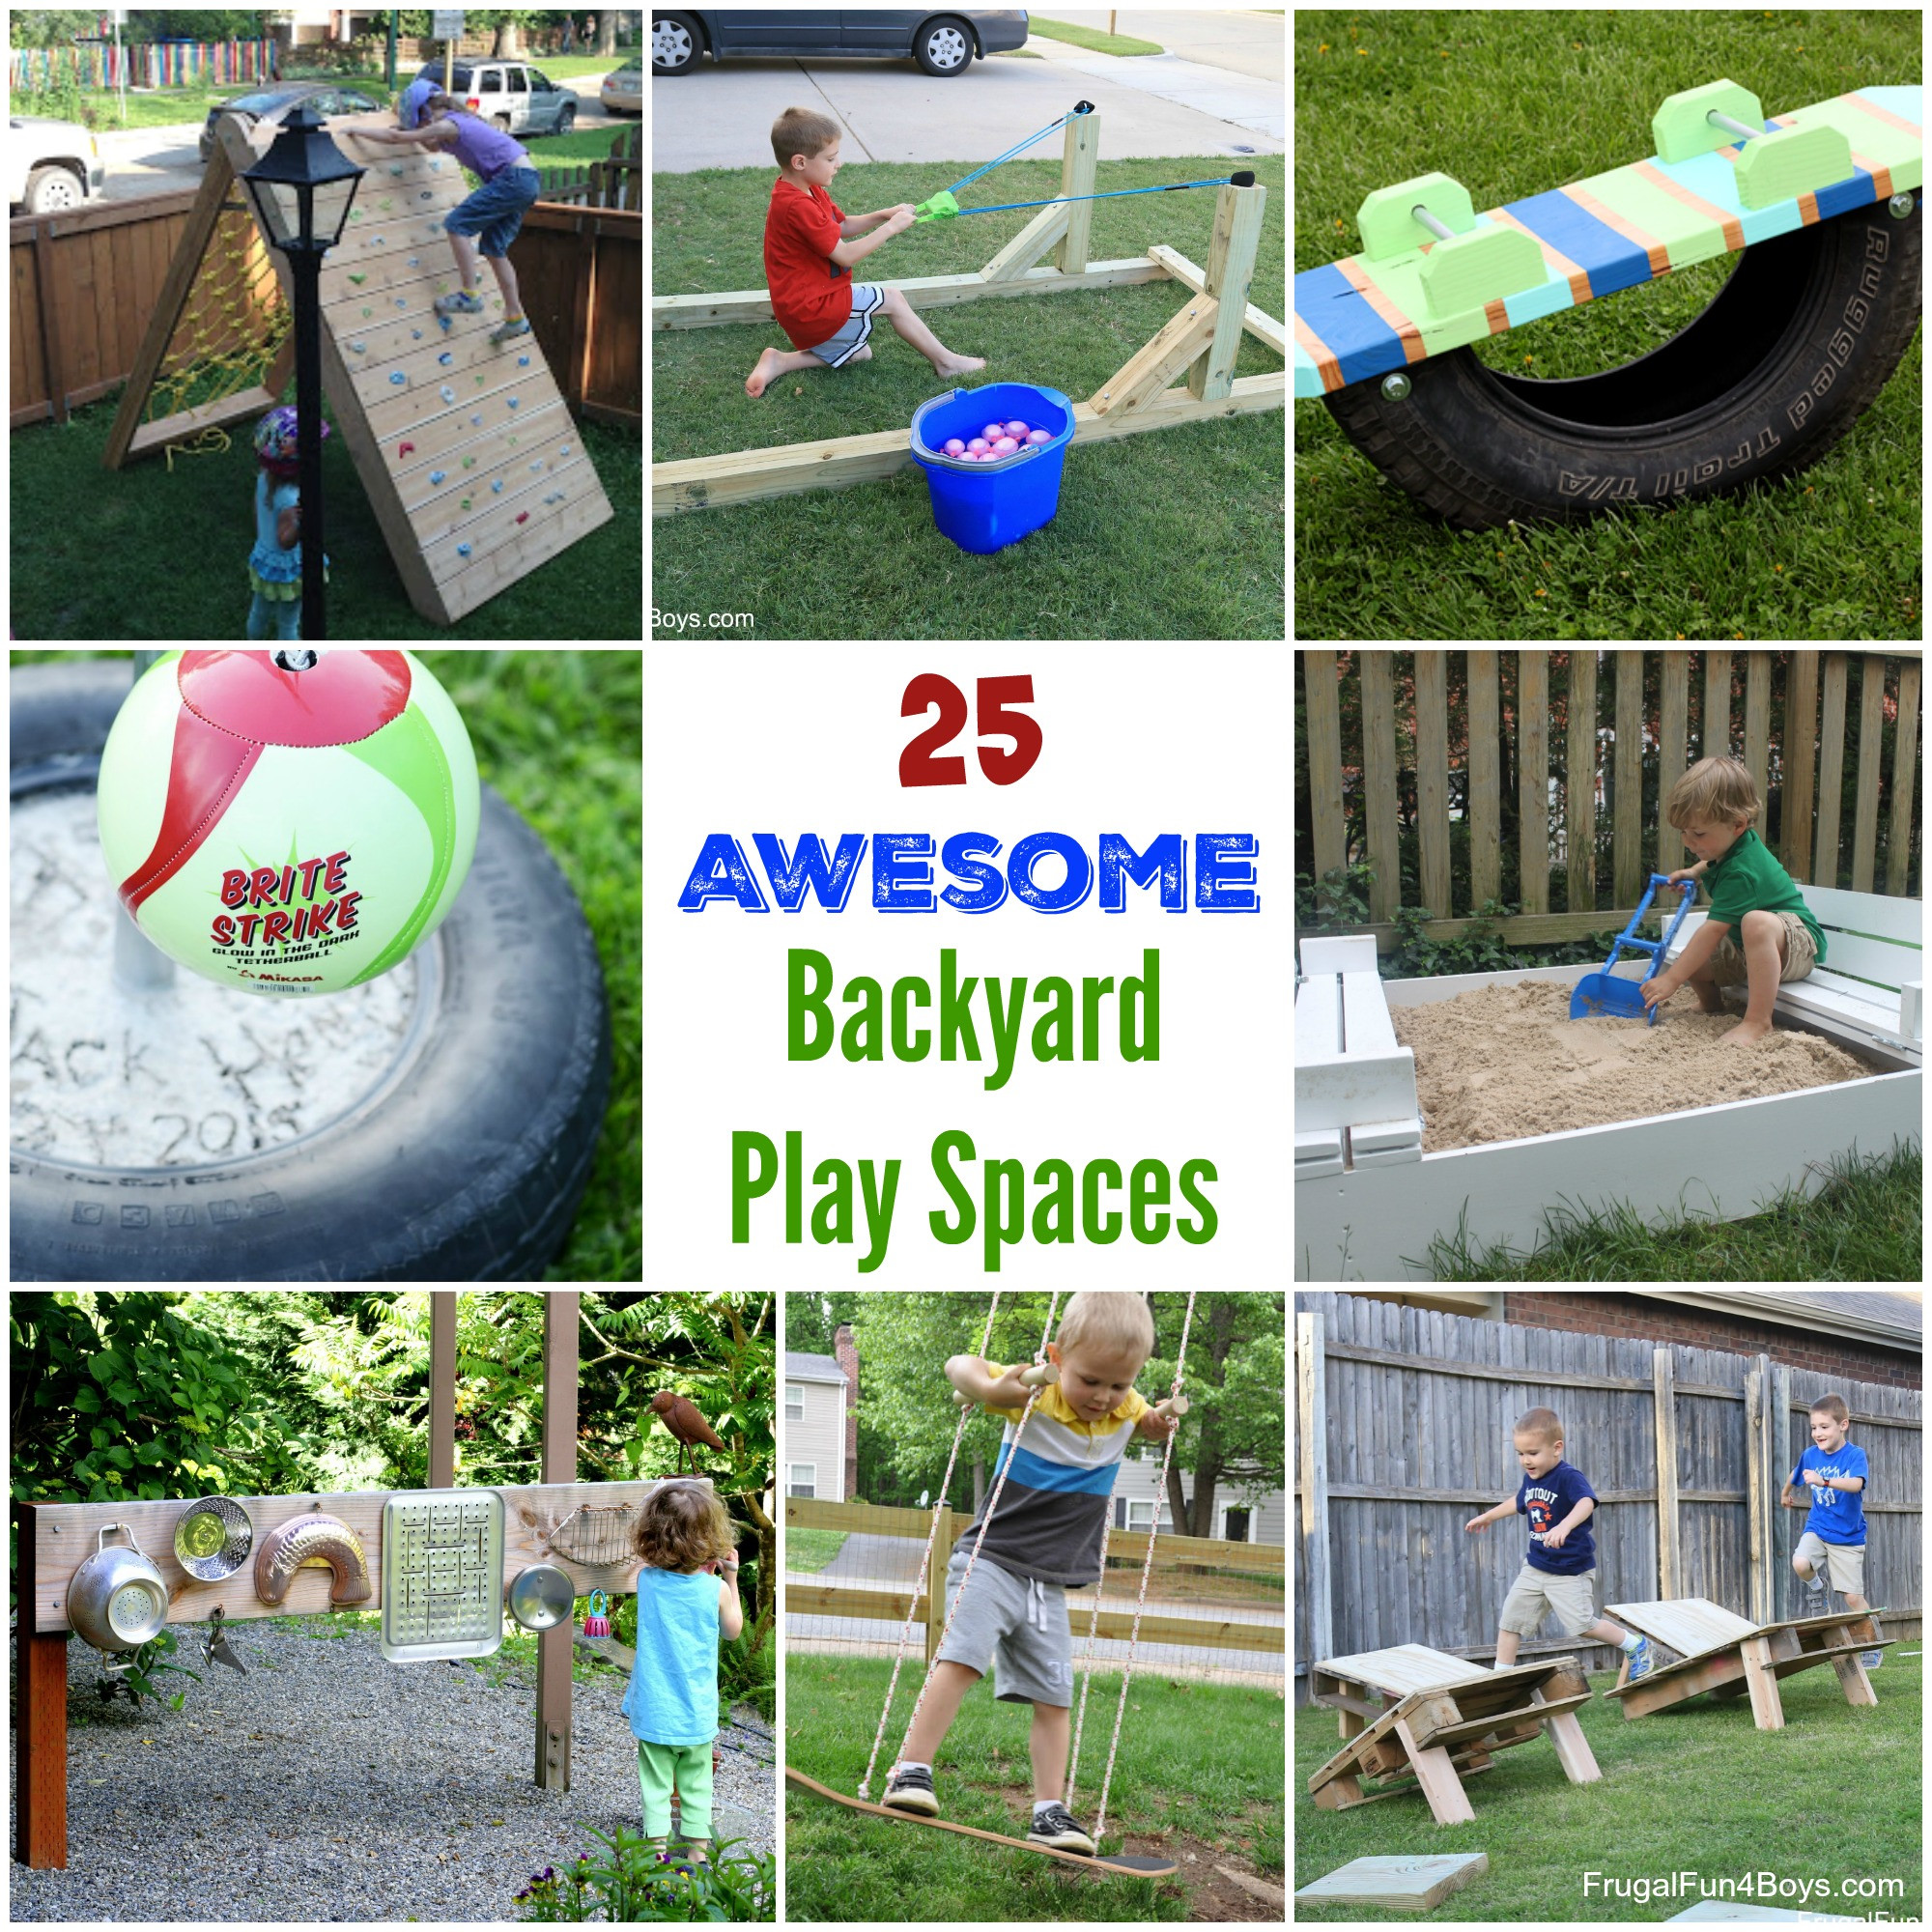 Backyard Children'S Play Equipment
 25 Awesome Backyard Play Spaces – Build climbing